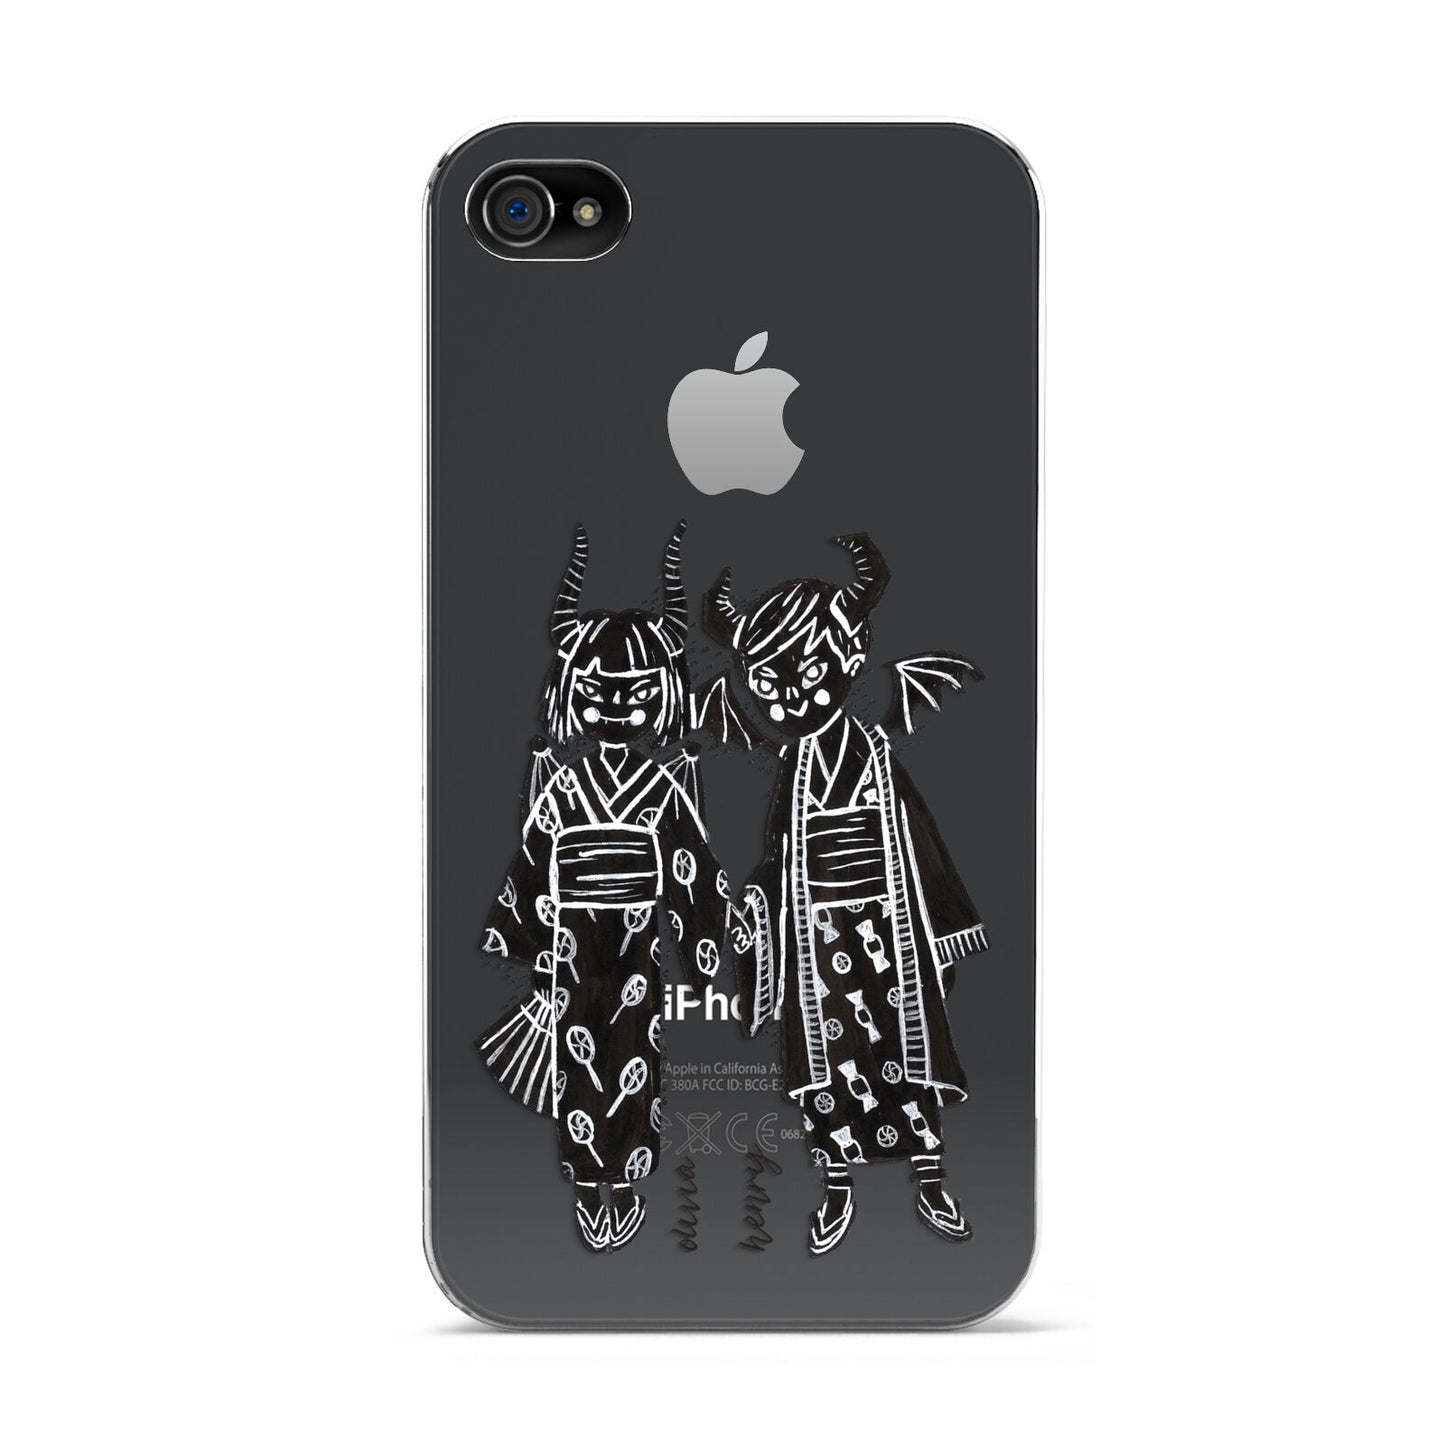 Kimono Devils Apple iPhone 4s Case